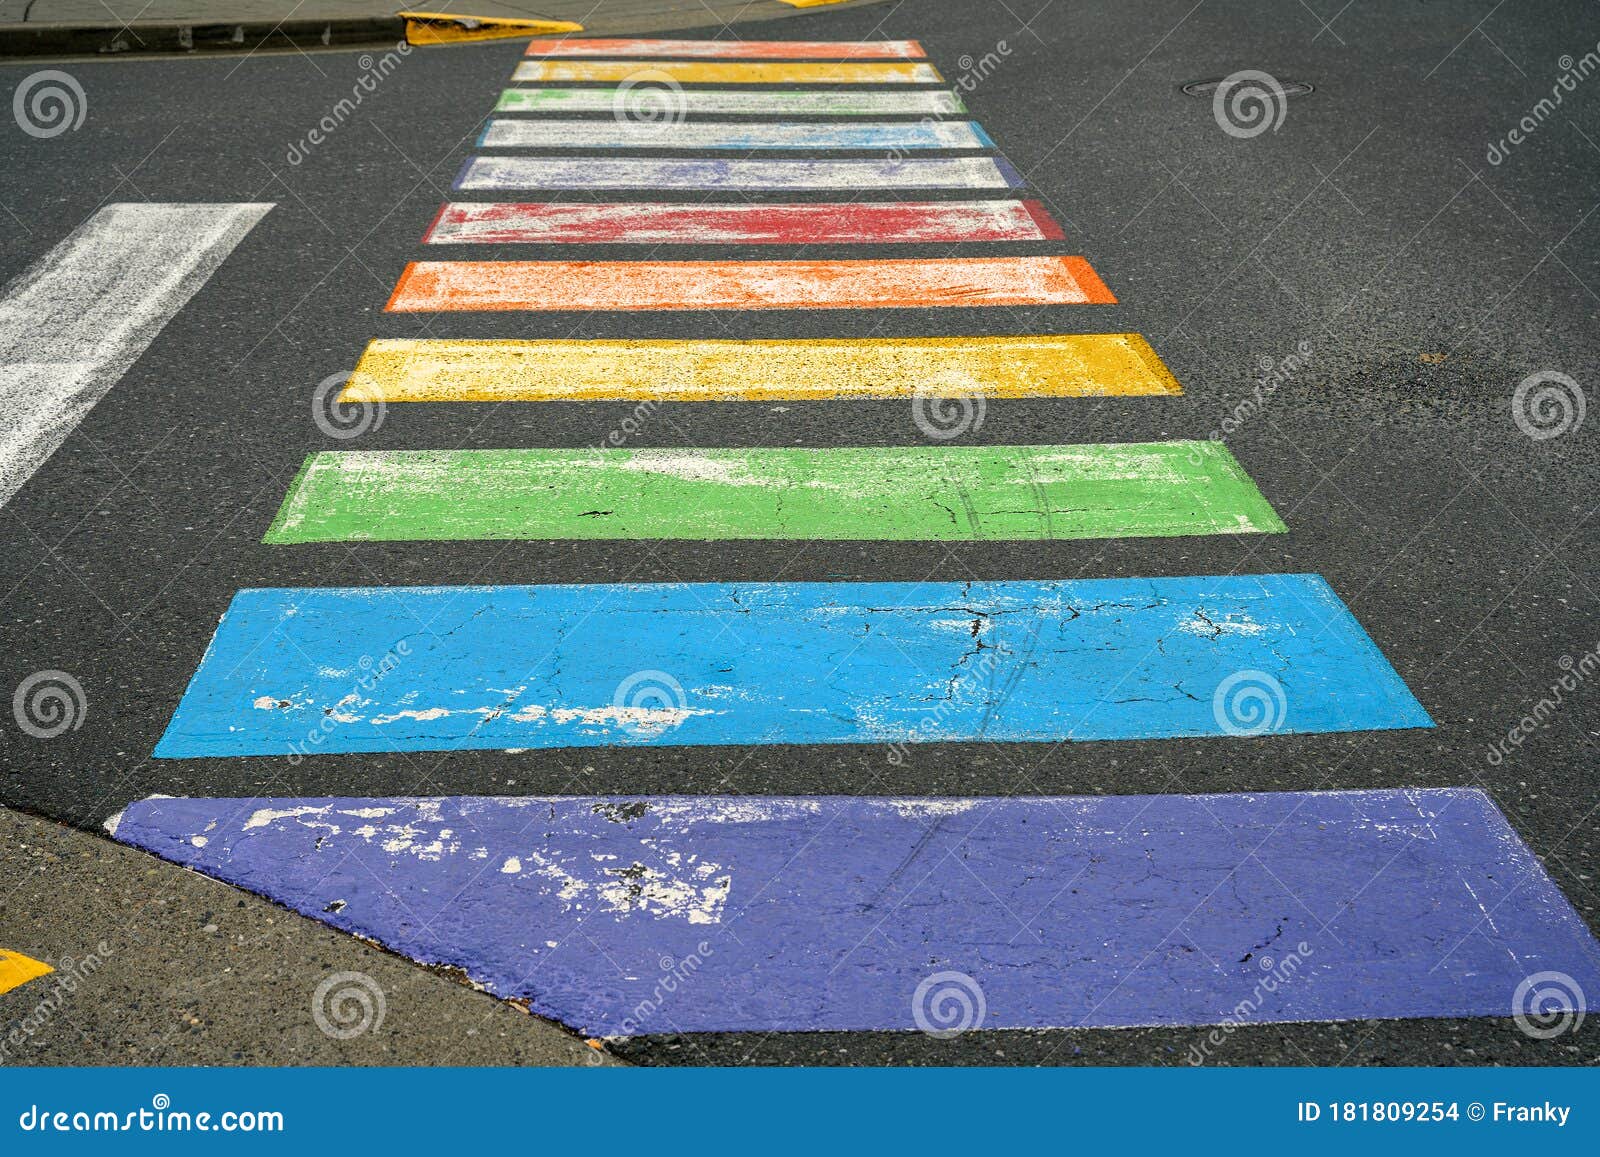 battered gay-themed rainbow color crosswalk